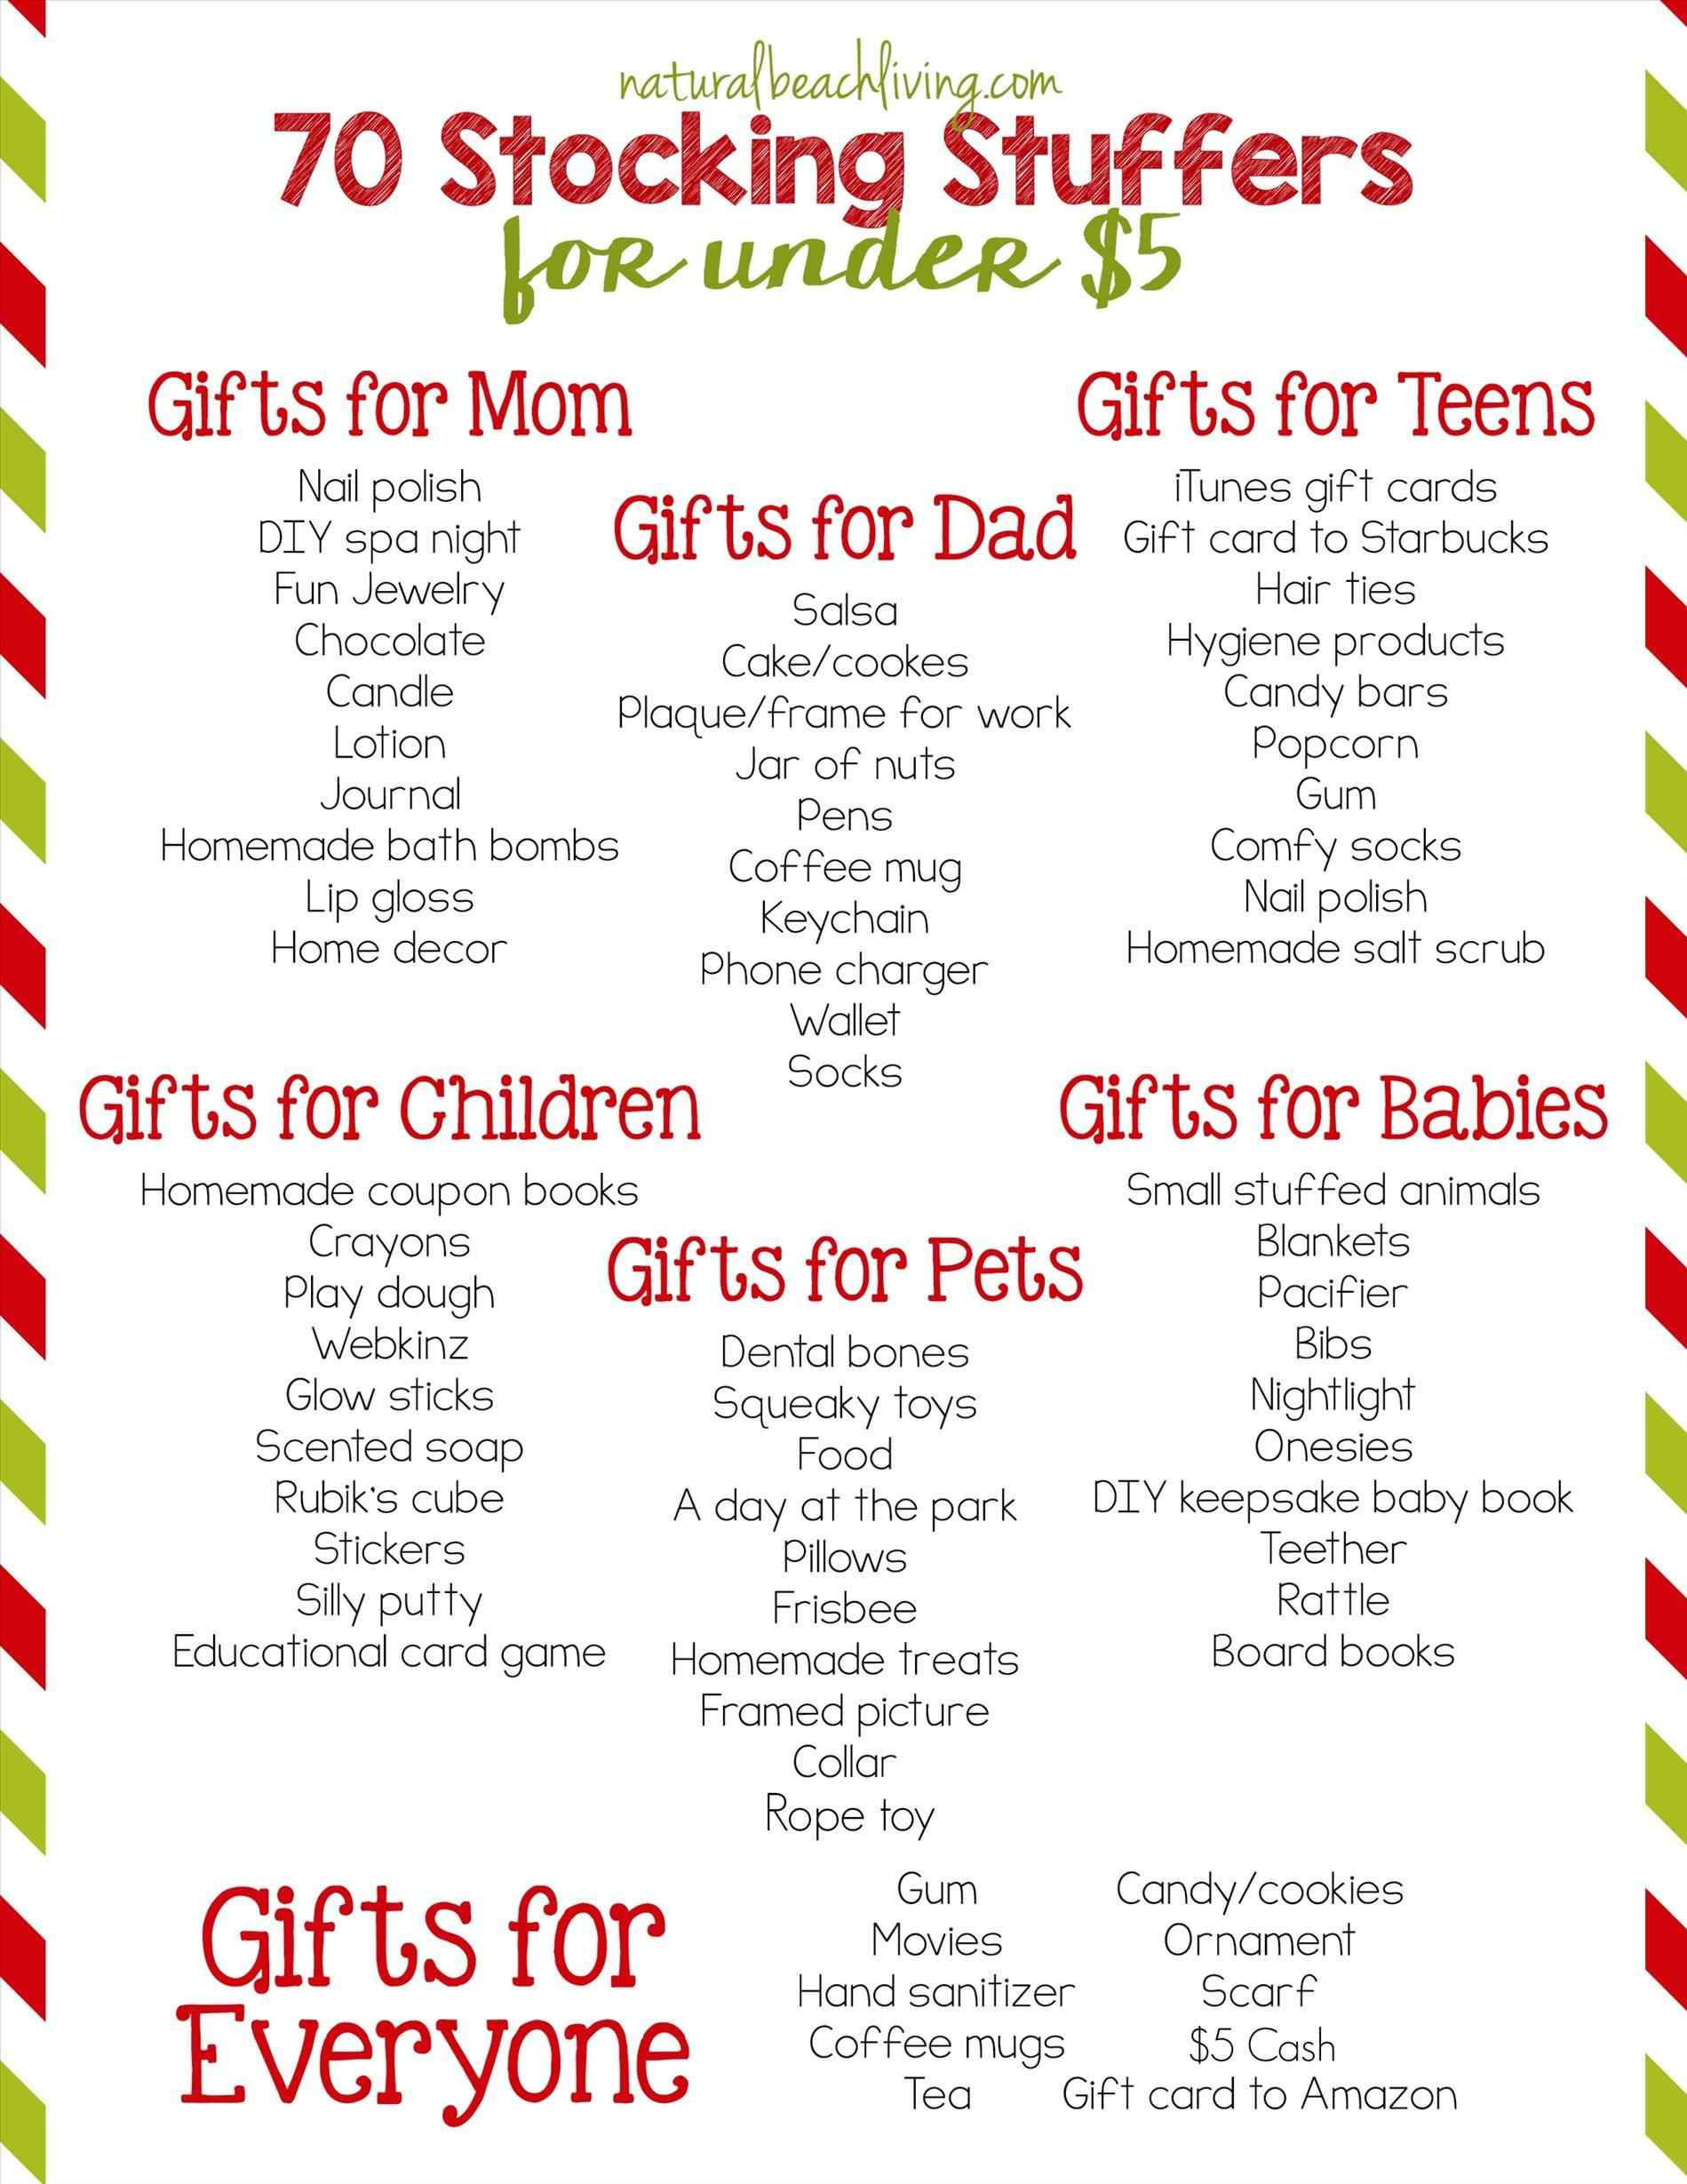 Best ideas about Secret Santa Gift Ideas Under $5
. Save or Pin Secret Santa Gift Ideas Under $5 Now.